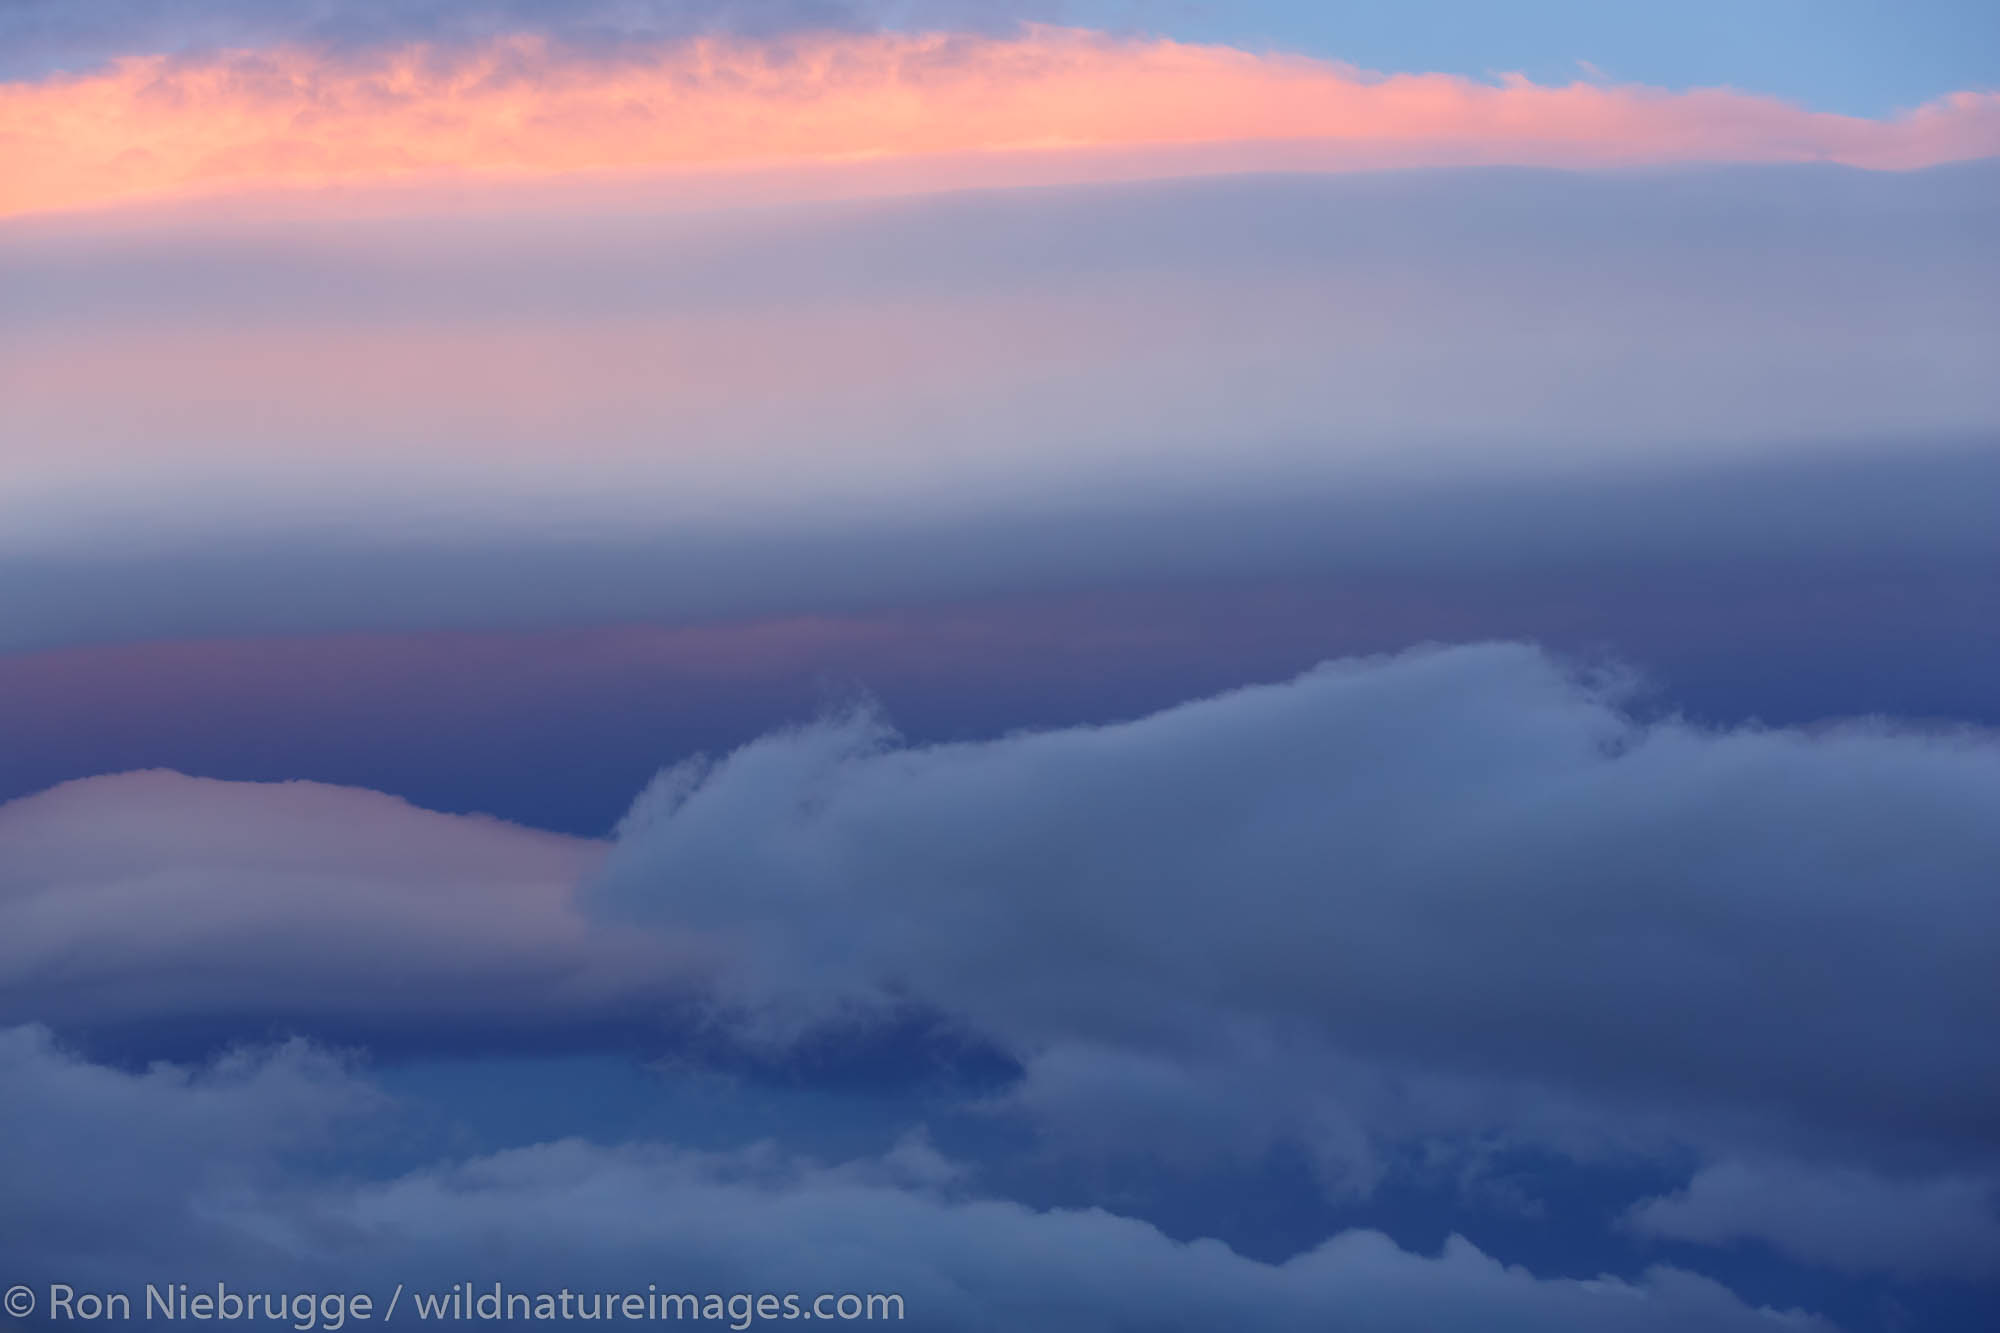 Clouds over Anza-Borrego Desert State Park, California.